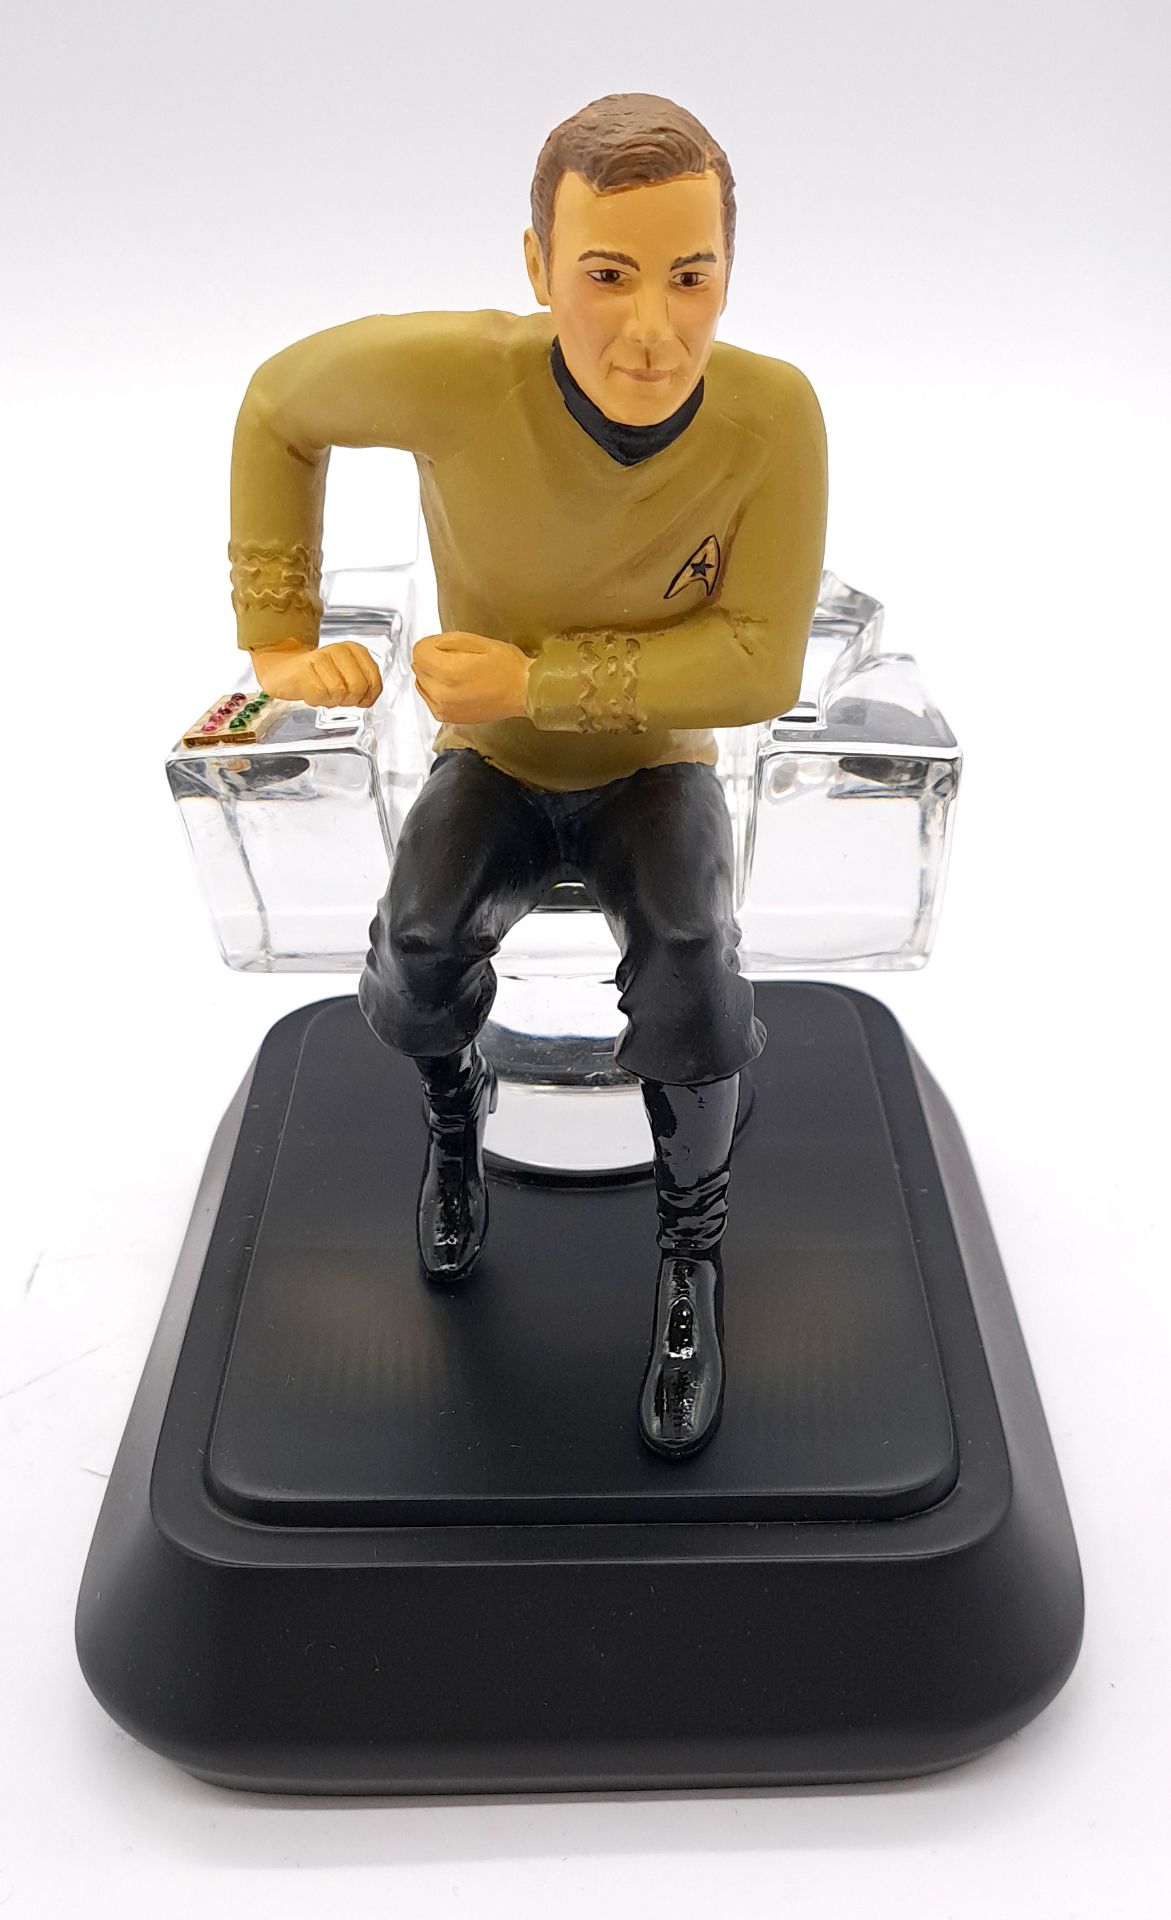 The Franklin Mint Star Trek Legends Captain James T Kirk Die-cast Figure, with Display Plinth